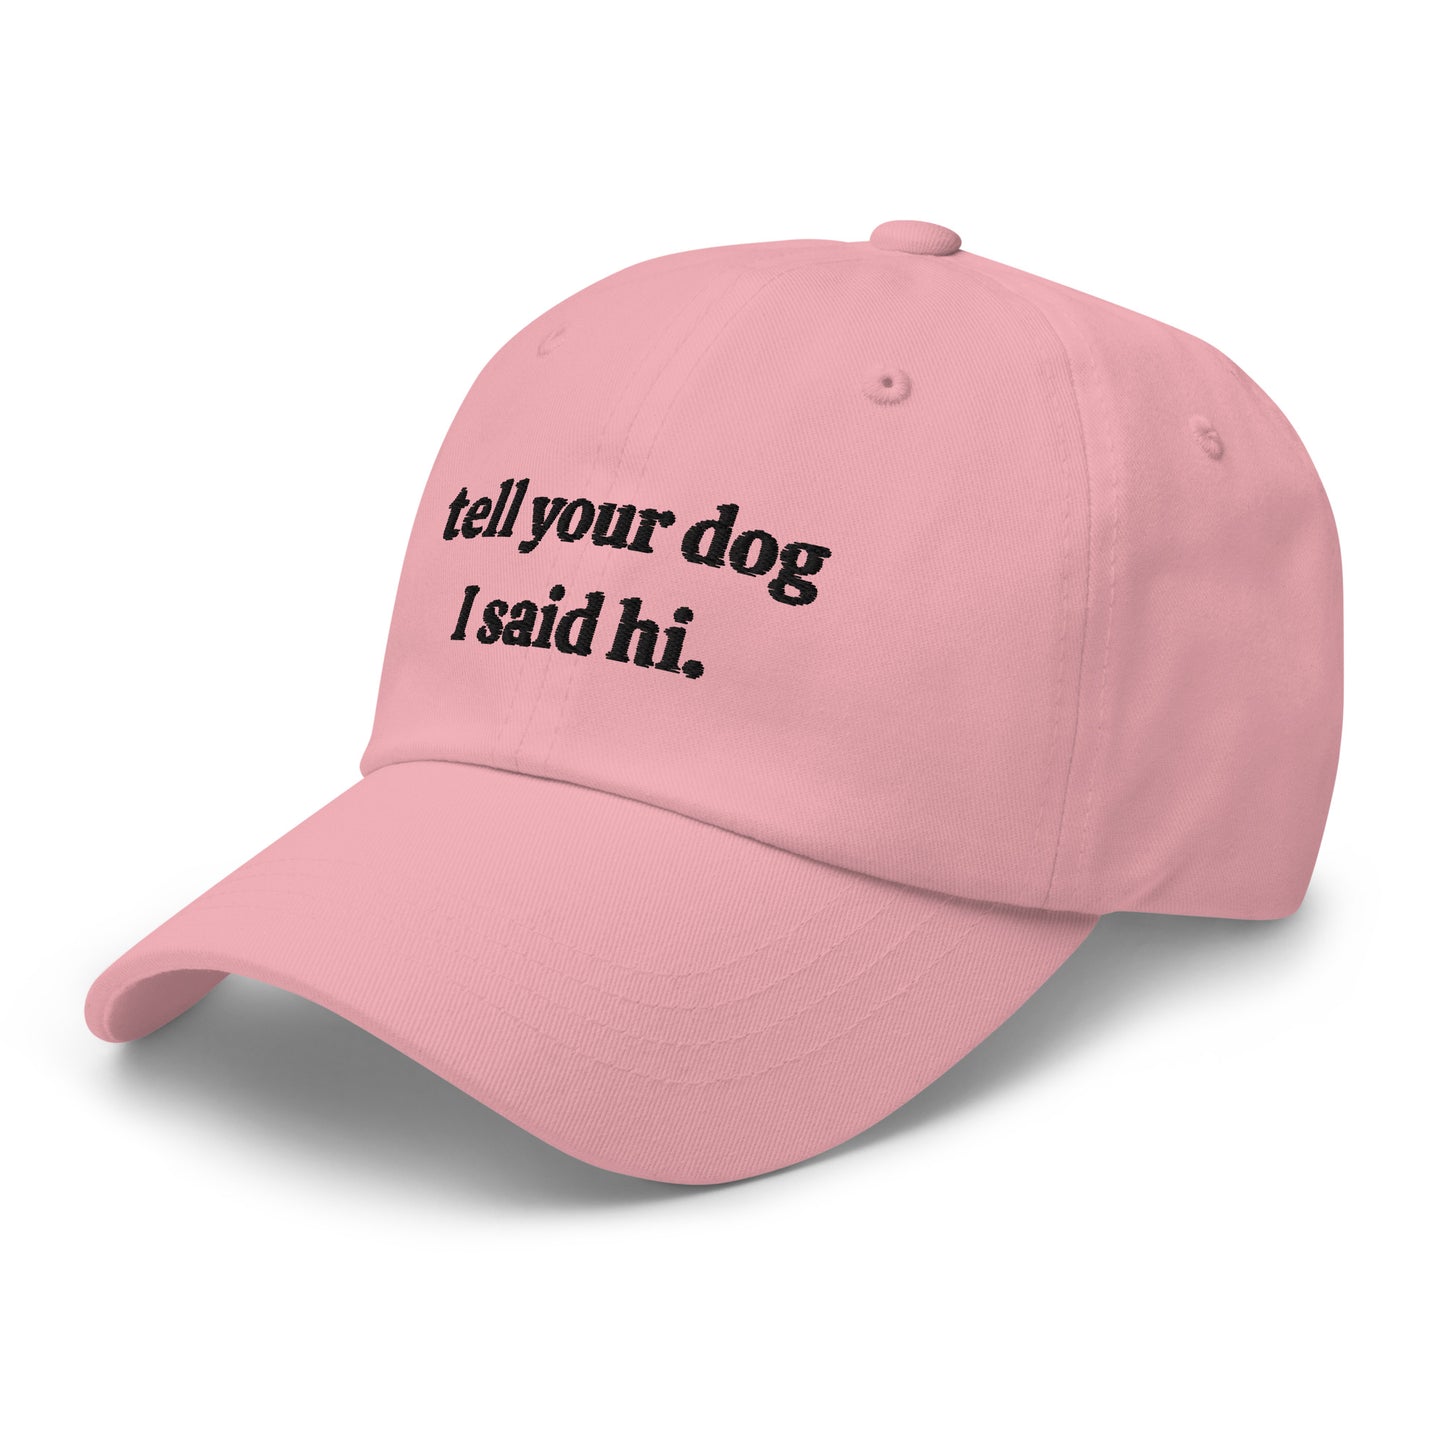 Tell Your Dog I Said Hi Dad hat